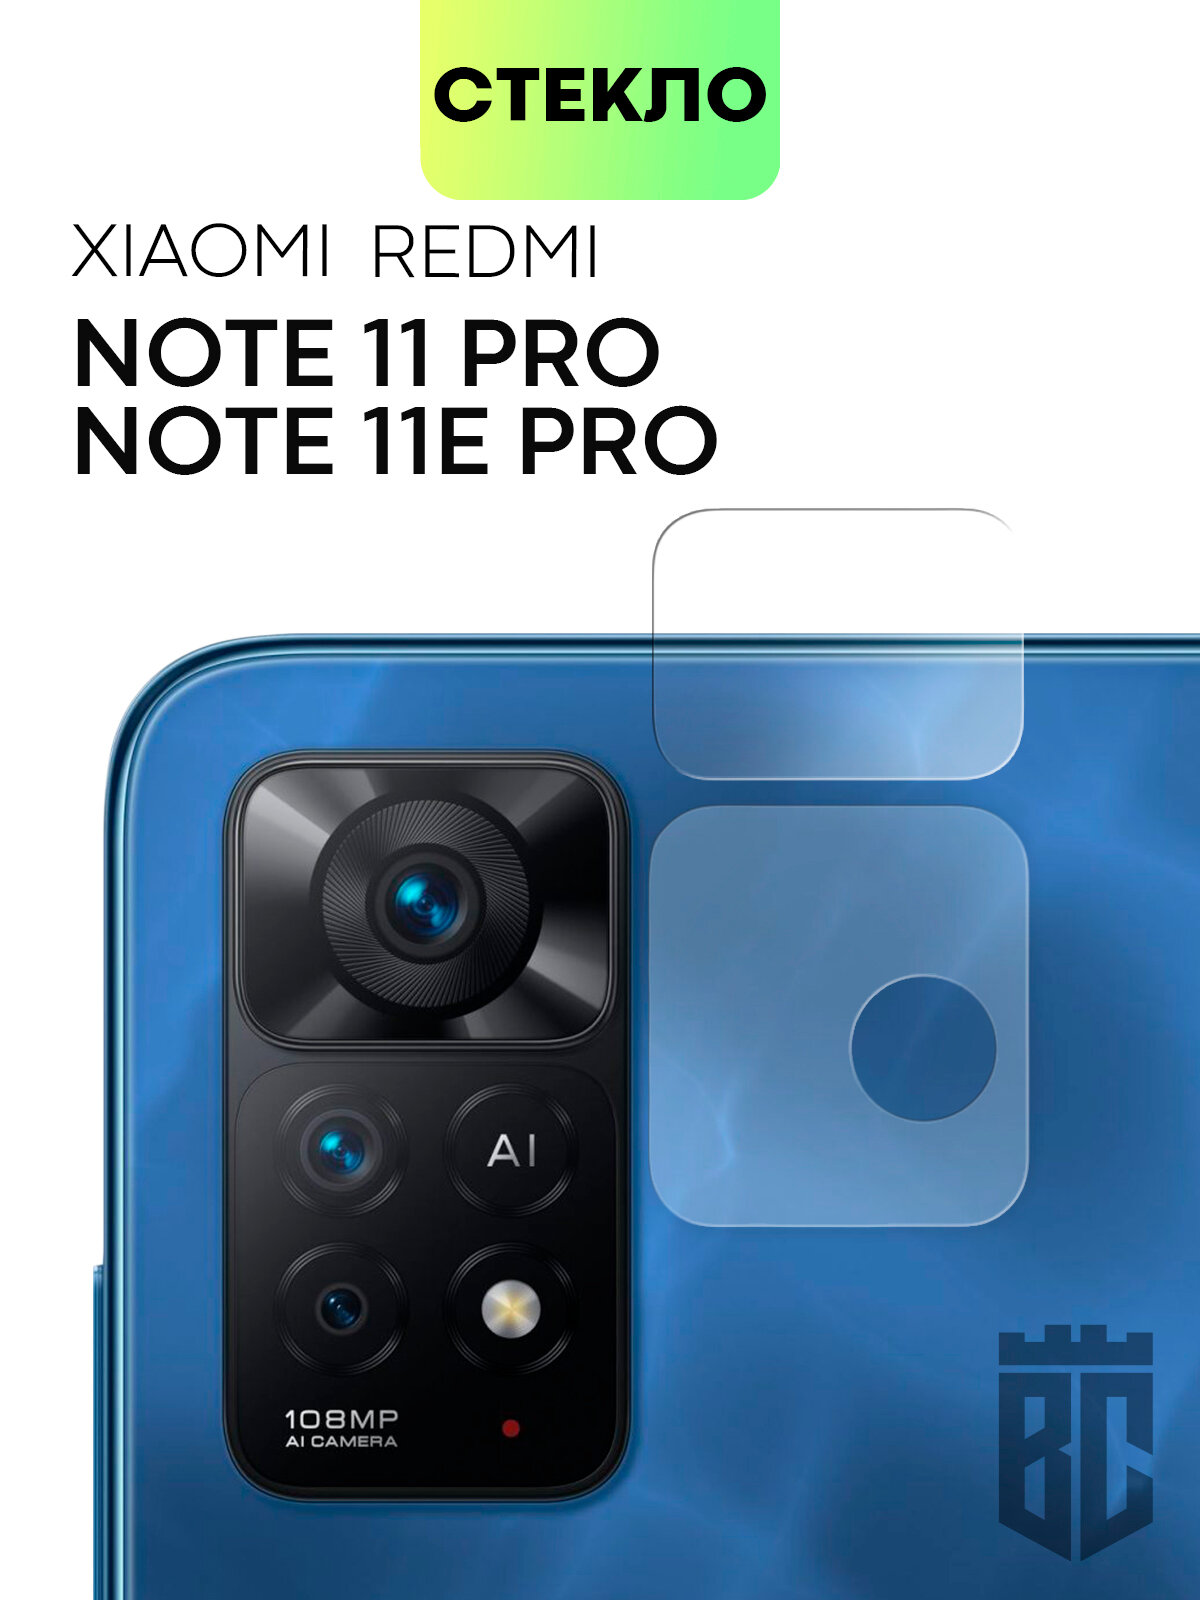 BROSCORP/ Стекло камеры телефона Xiaomi Redmi Note 11 Pro 5G Note 11 Pro 4G (Сяоми Редми Ноут 11 Про 5Г Редми Нот 11 Про 4Г) стекло для блока камер